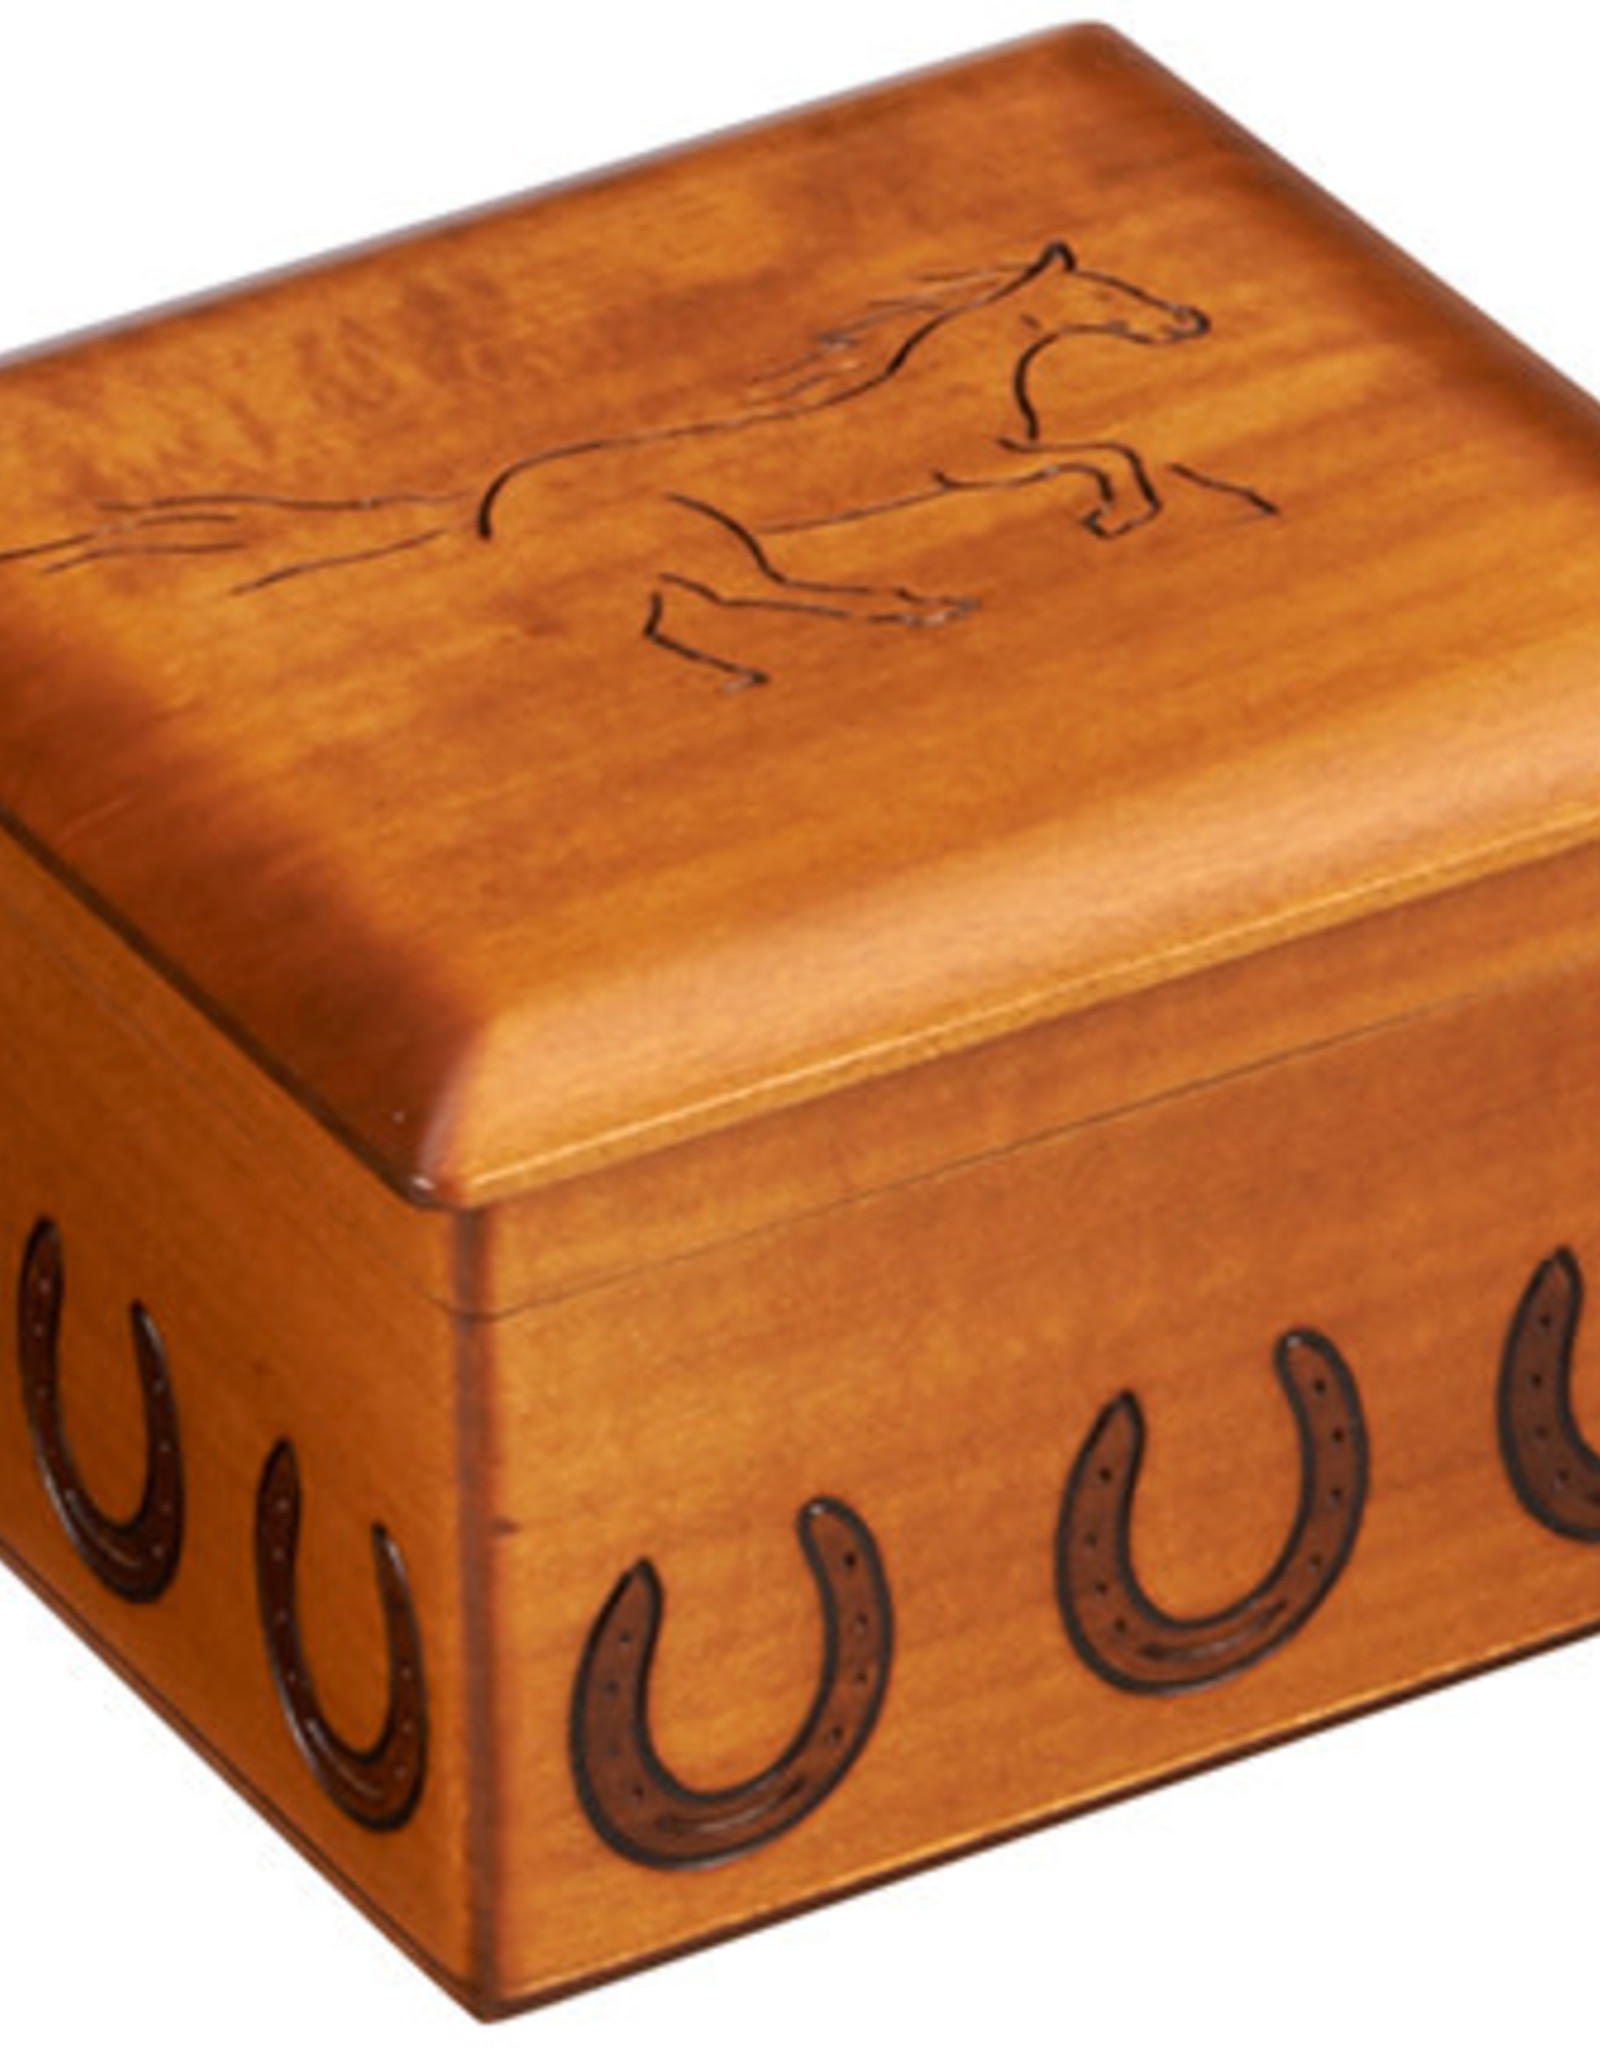 Wooden Galloping Horse Box